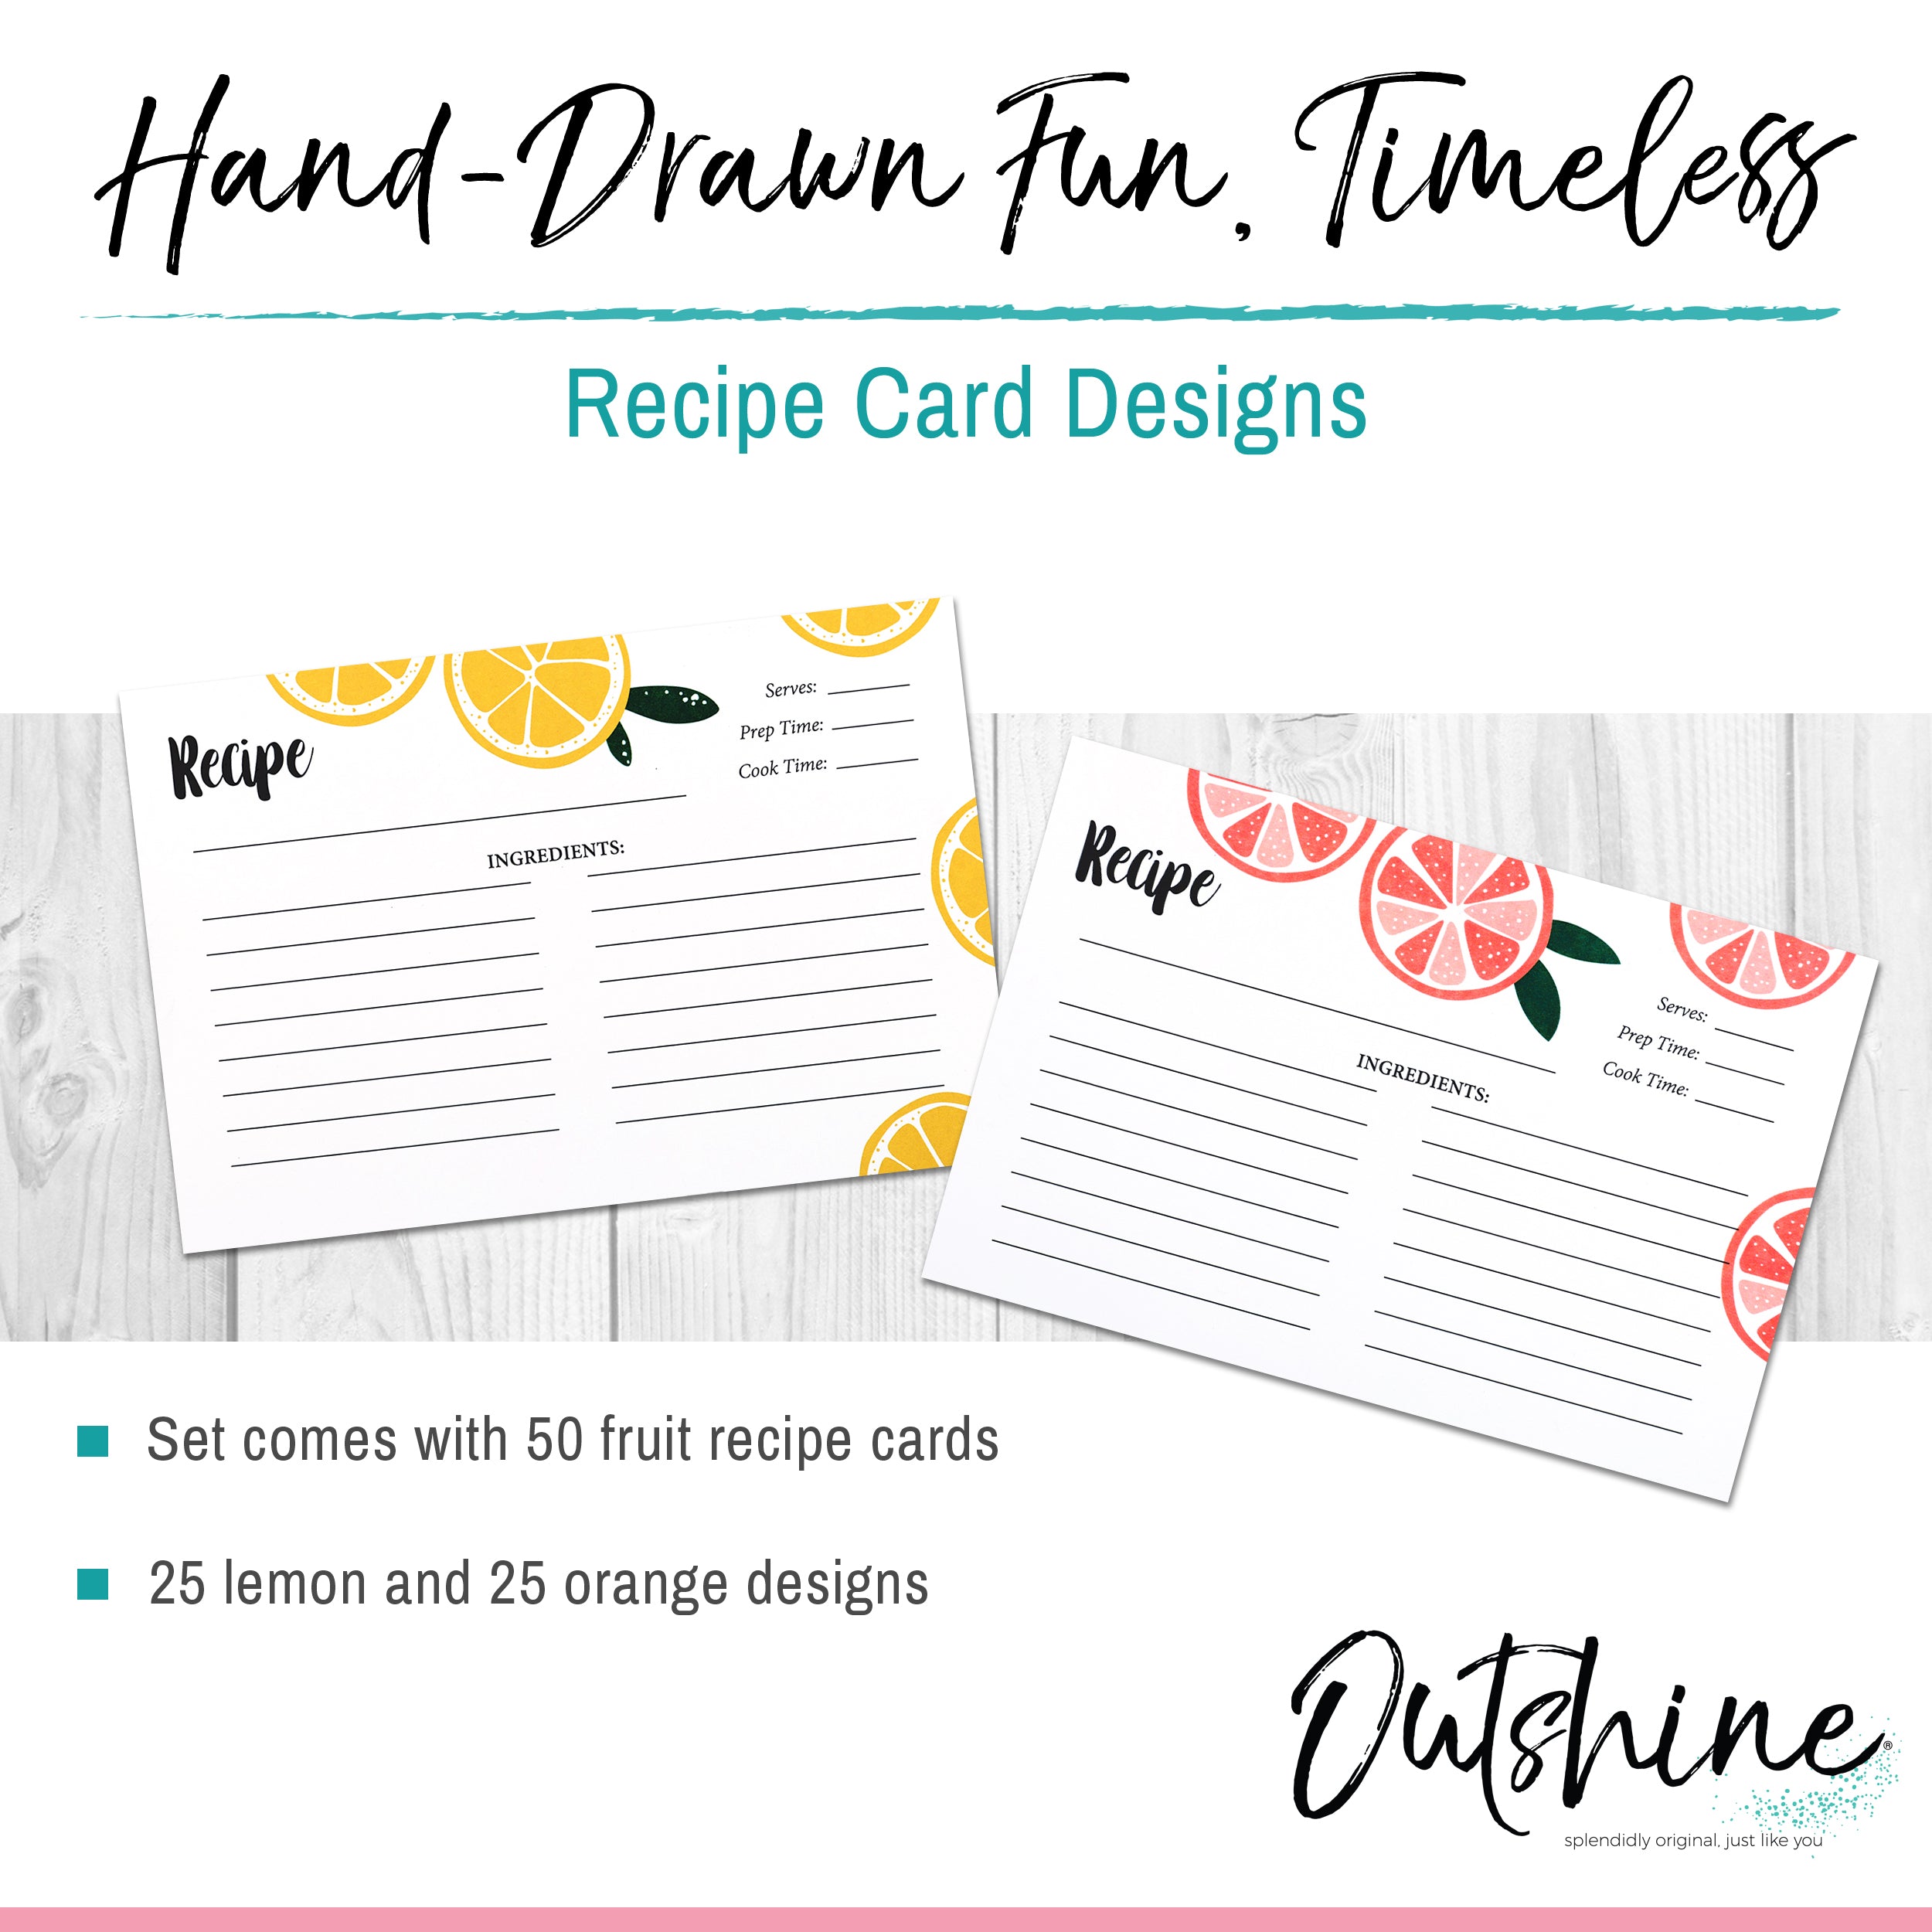 Favorite Family Recipe Personalized Recipe Cards - 4x6